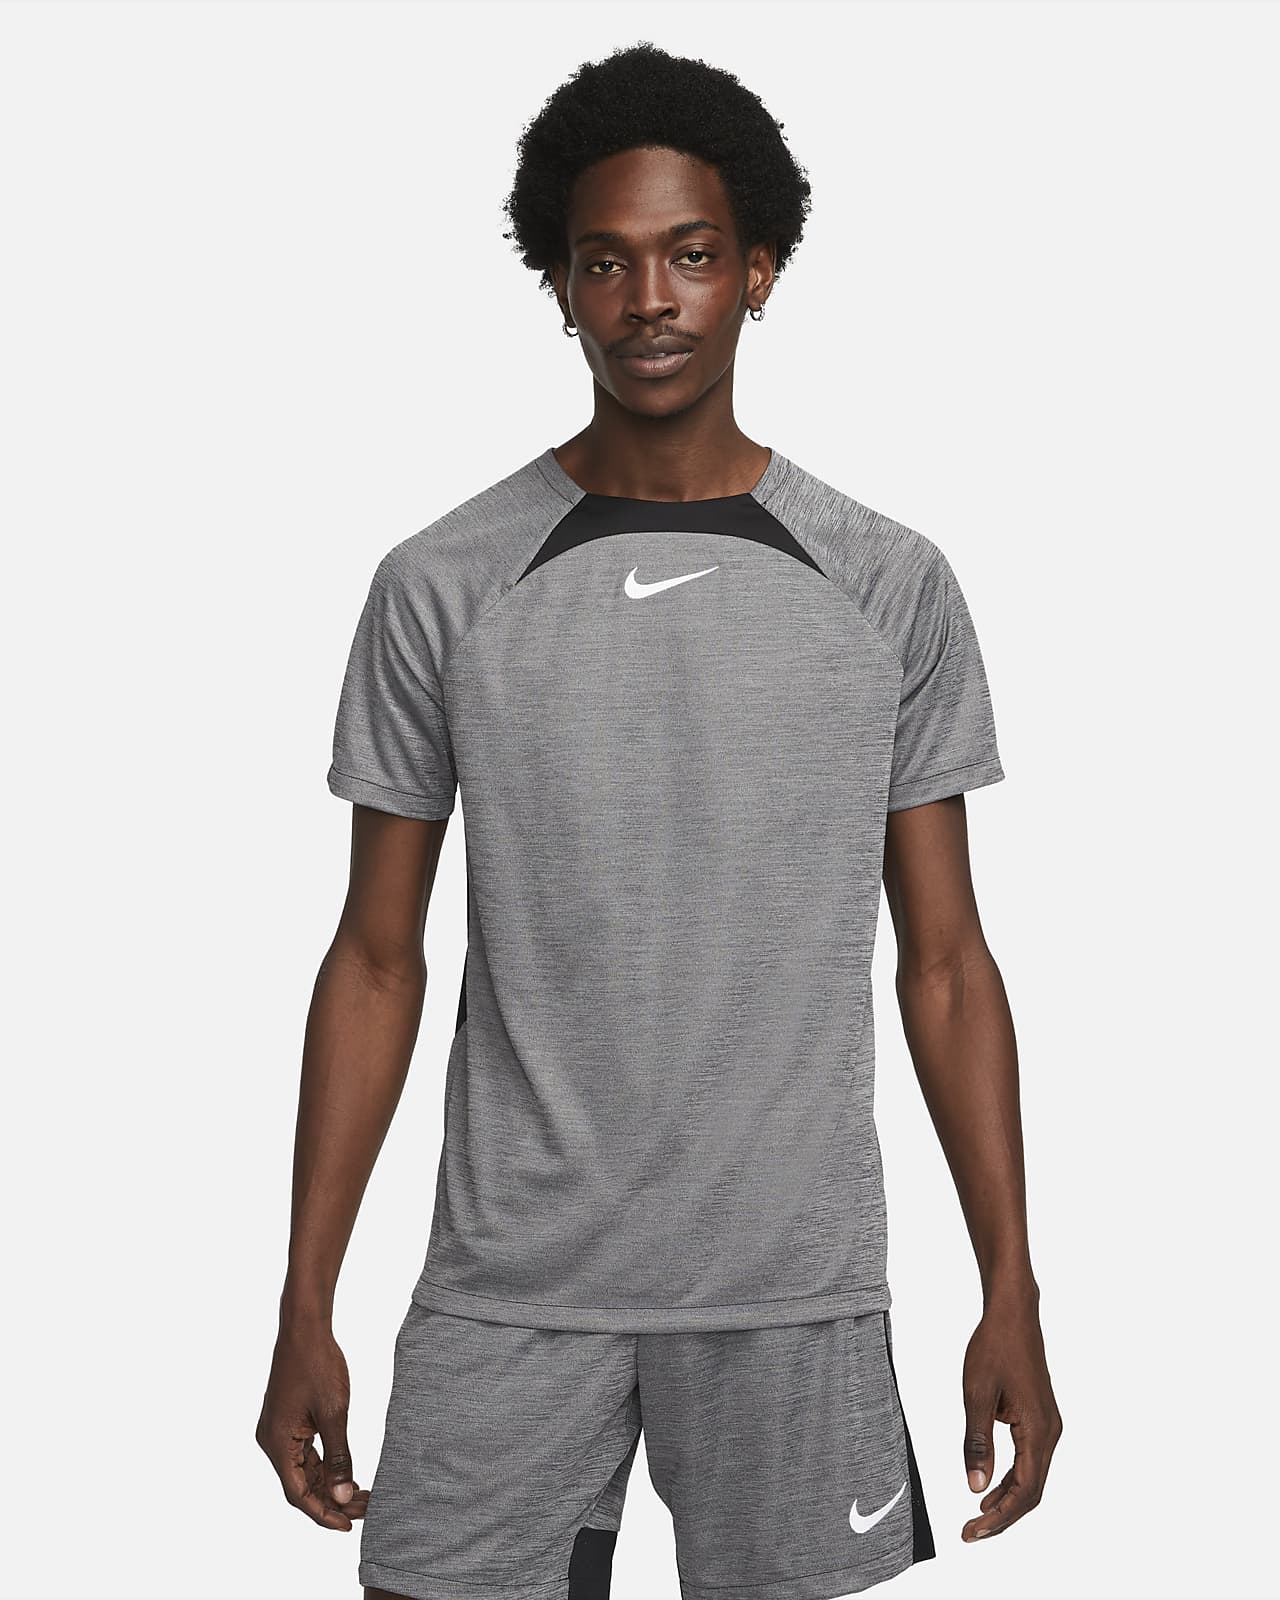 Dri-FIT Academy Men's Short-Sleeve Football Top. Nike